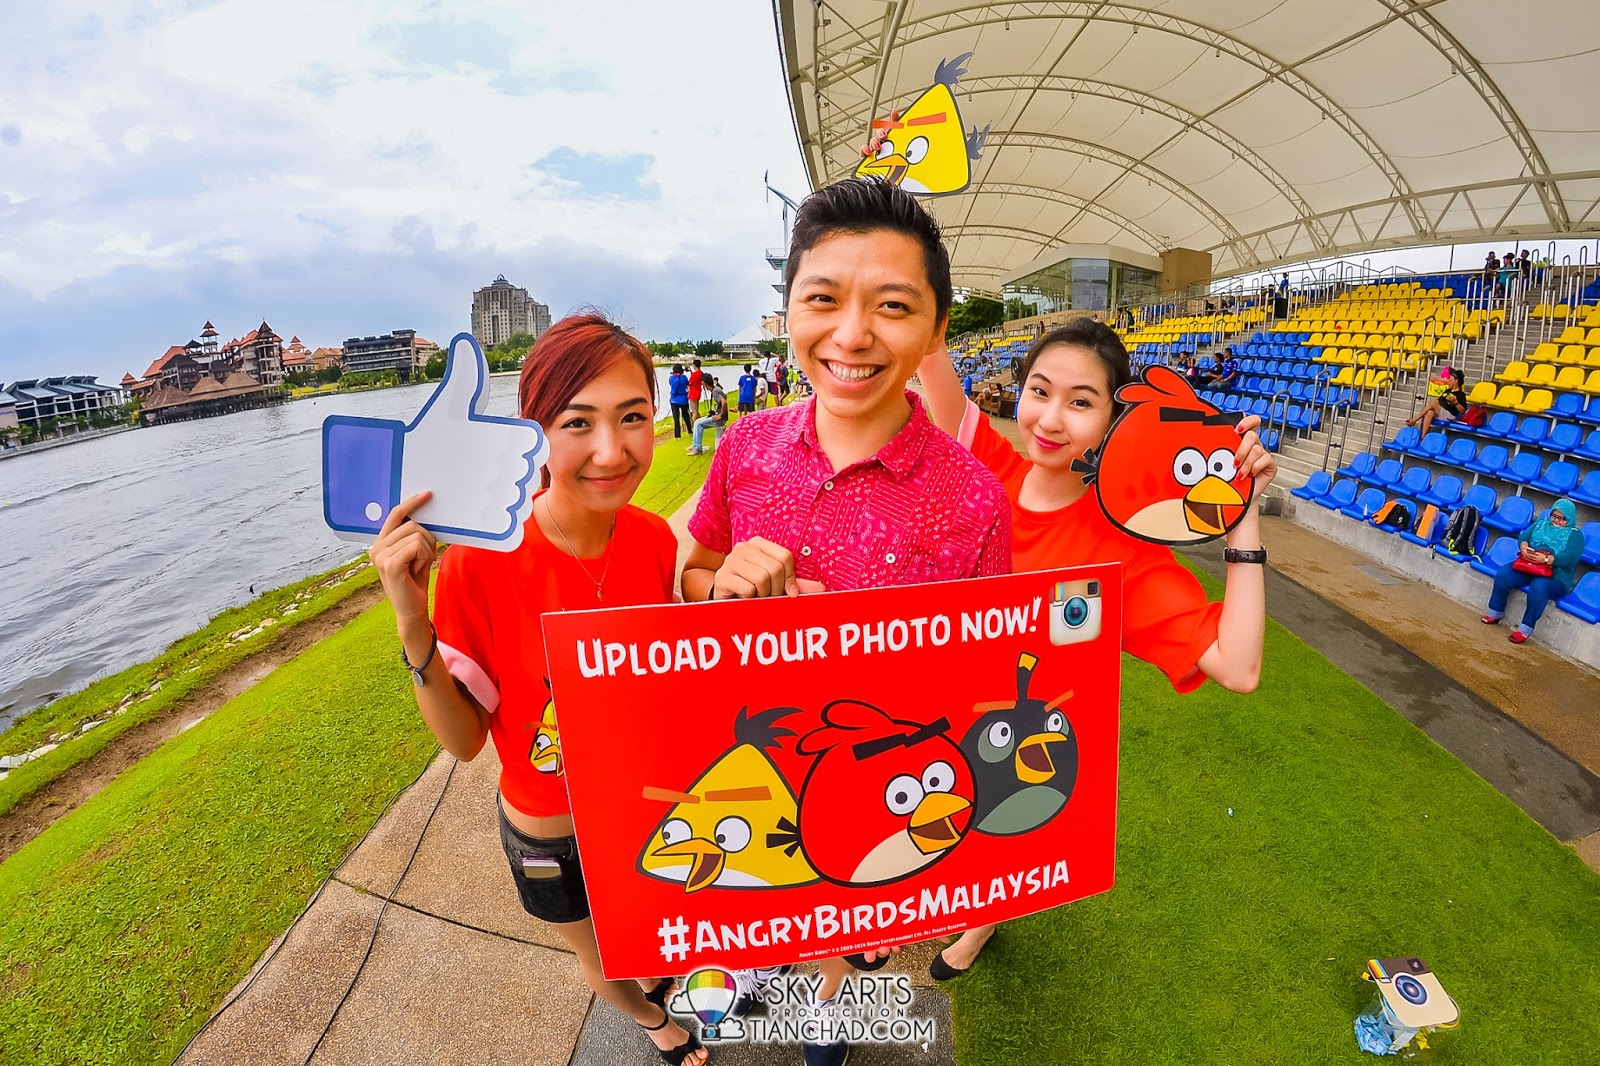 #TCFisheye with beautiful Angry Birds ambassadors at Putrajaya Nautique Ski & Wake Championship 2014 #AngryBirdsMalaysia